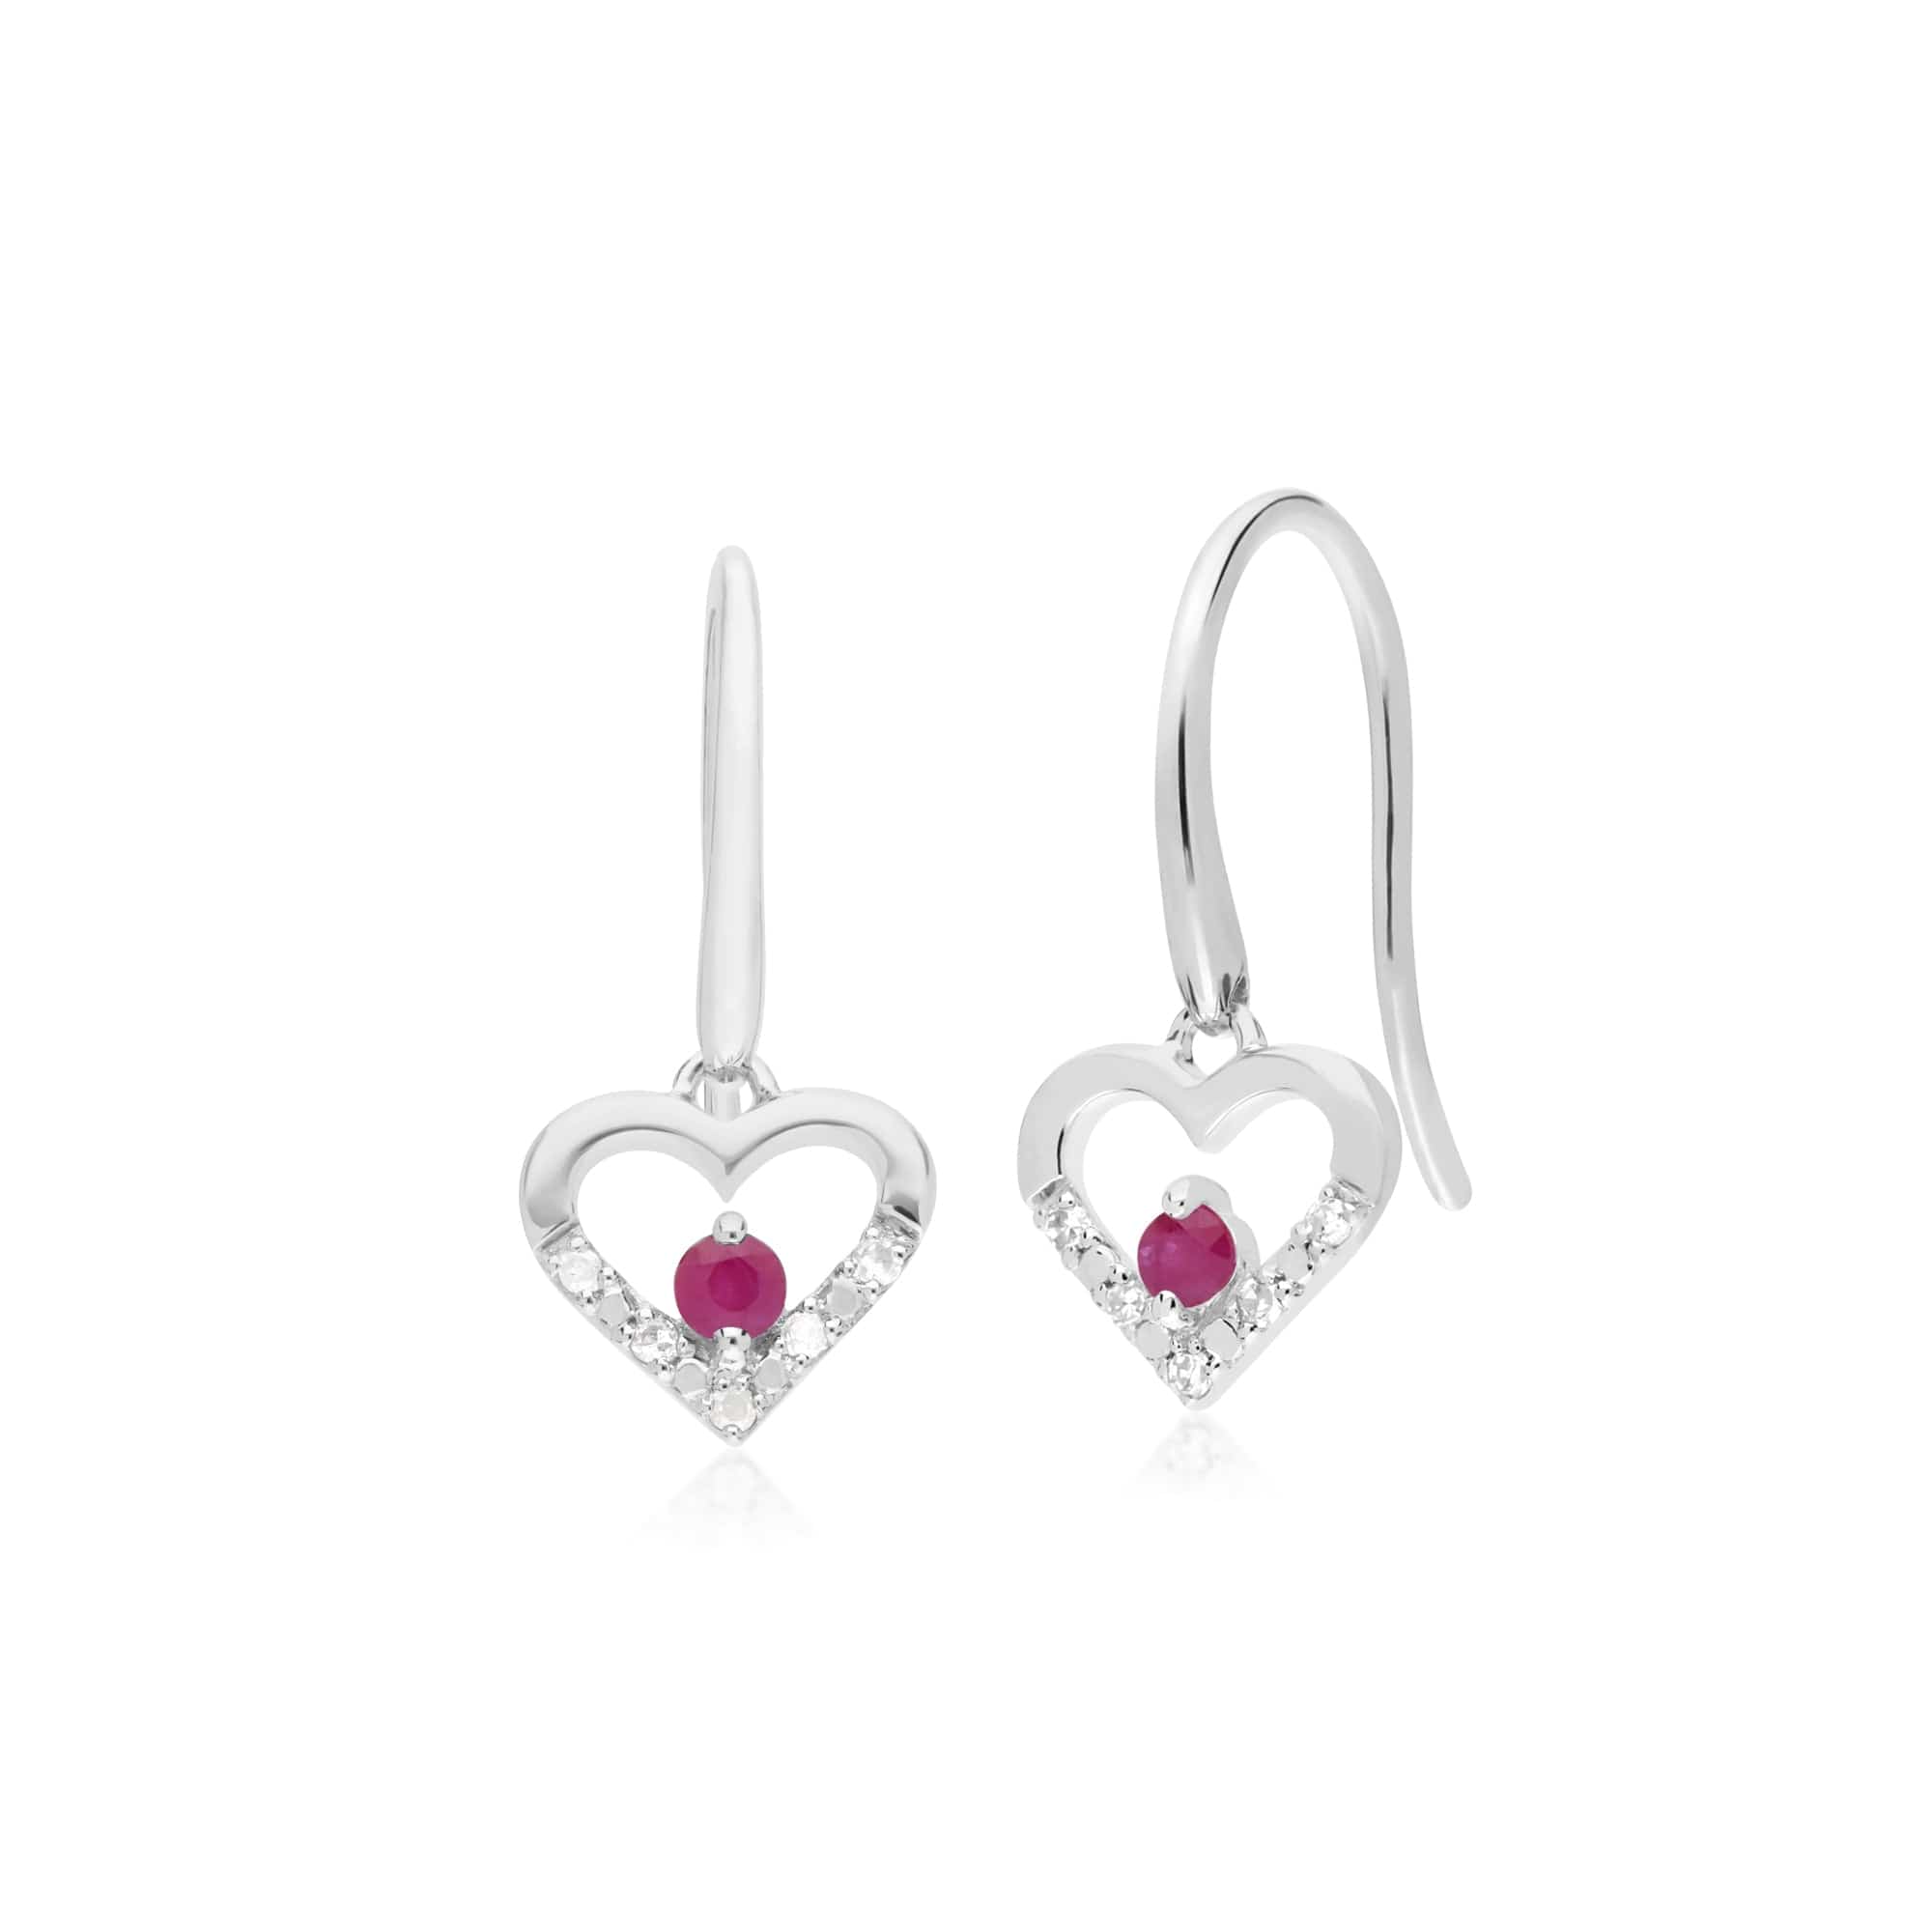 Classic Round Ruby & Diamond Love Heart Shaped Drop Earrings in 9ct White Gold - Gemondo